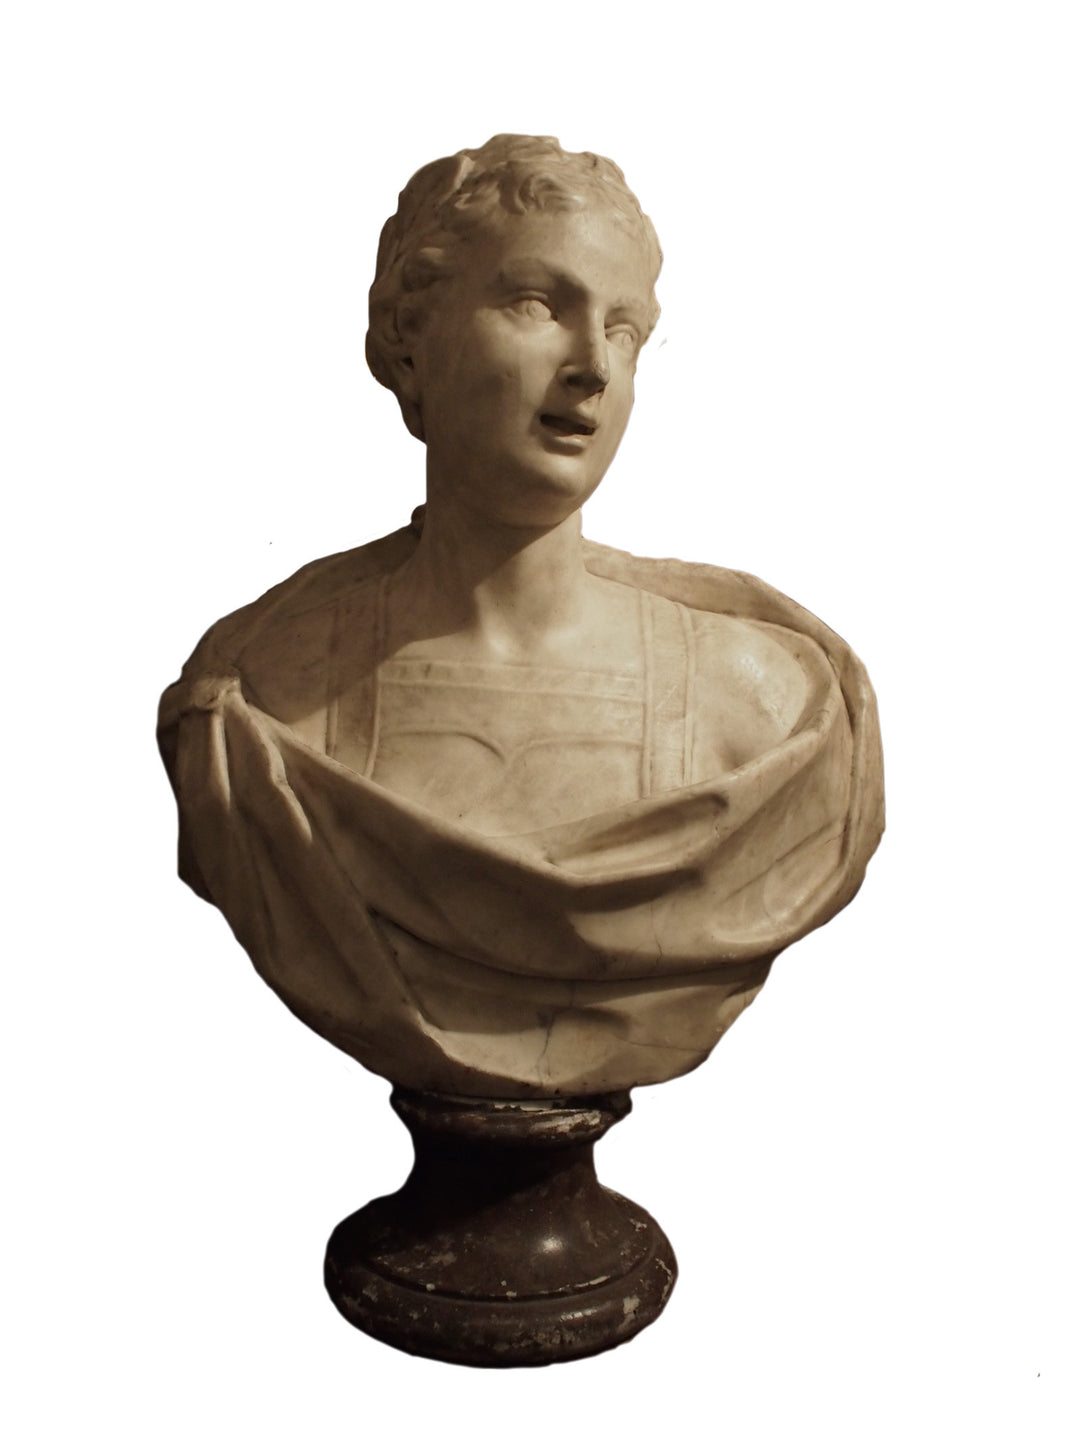 A Seventeeth-Century Renaissance Bust in Roman Garb